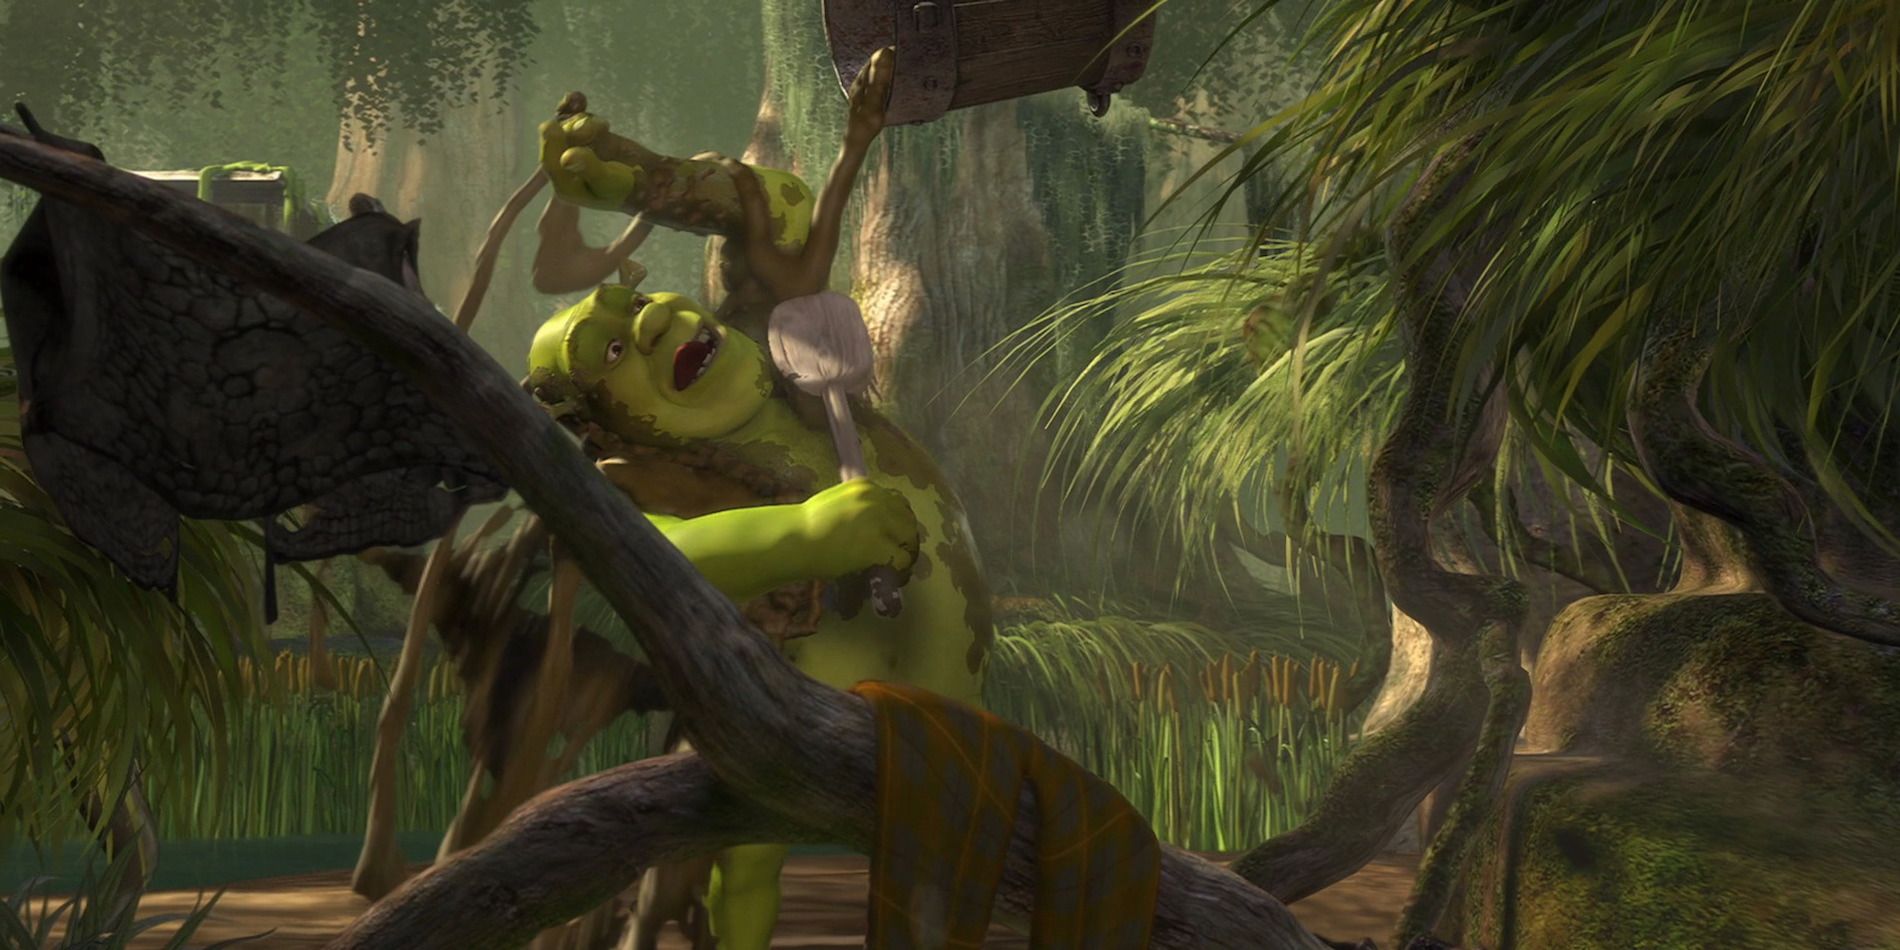 Shrek taking a mud bath in the original Shrek movie.